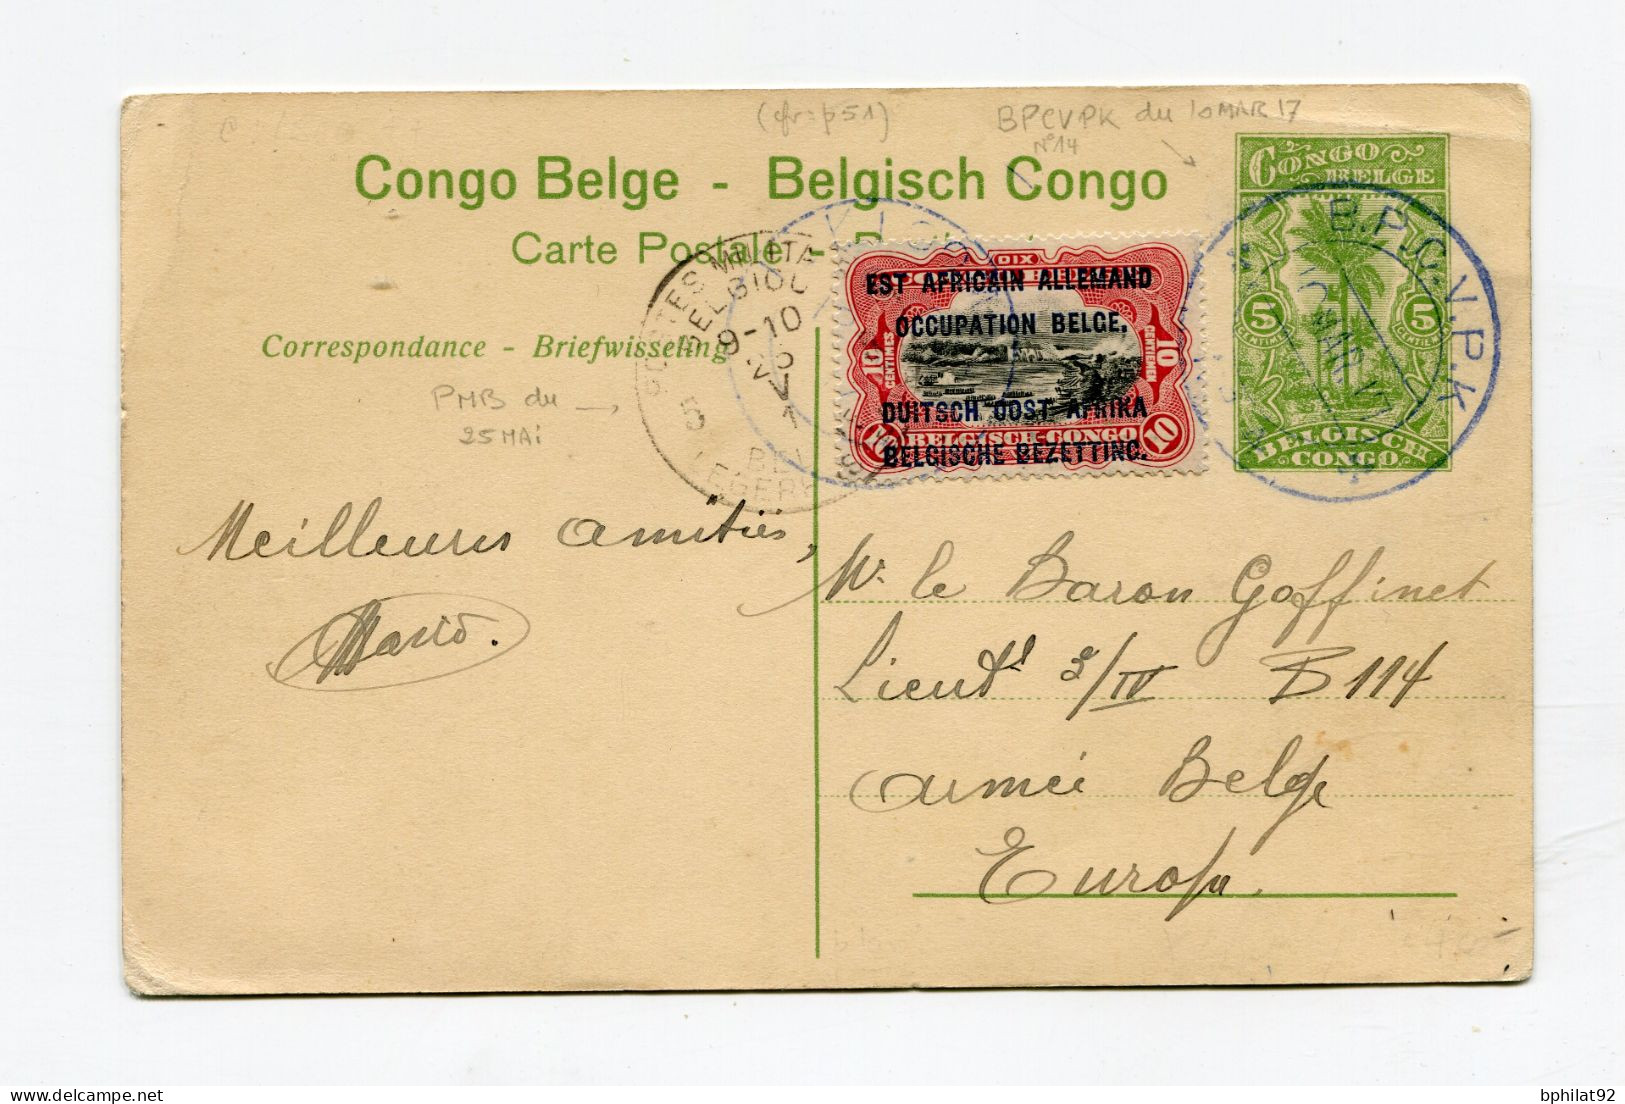 !!! ENTIER POSTAL DU CONGO BELGE, CACHET BPCVPK DE 1917 - Storia Postale